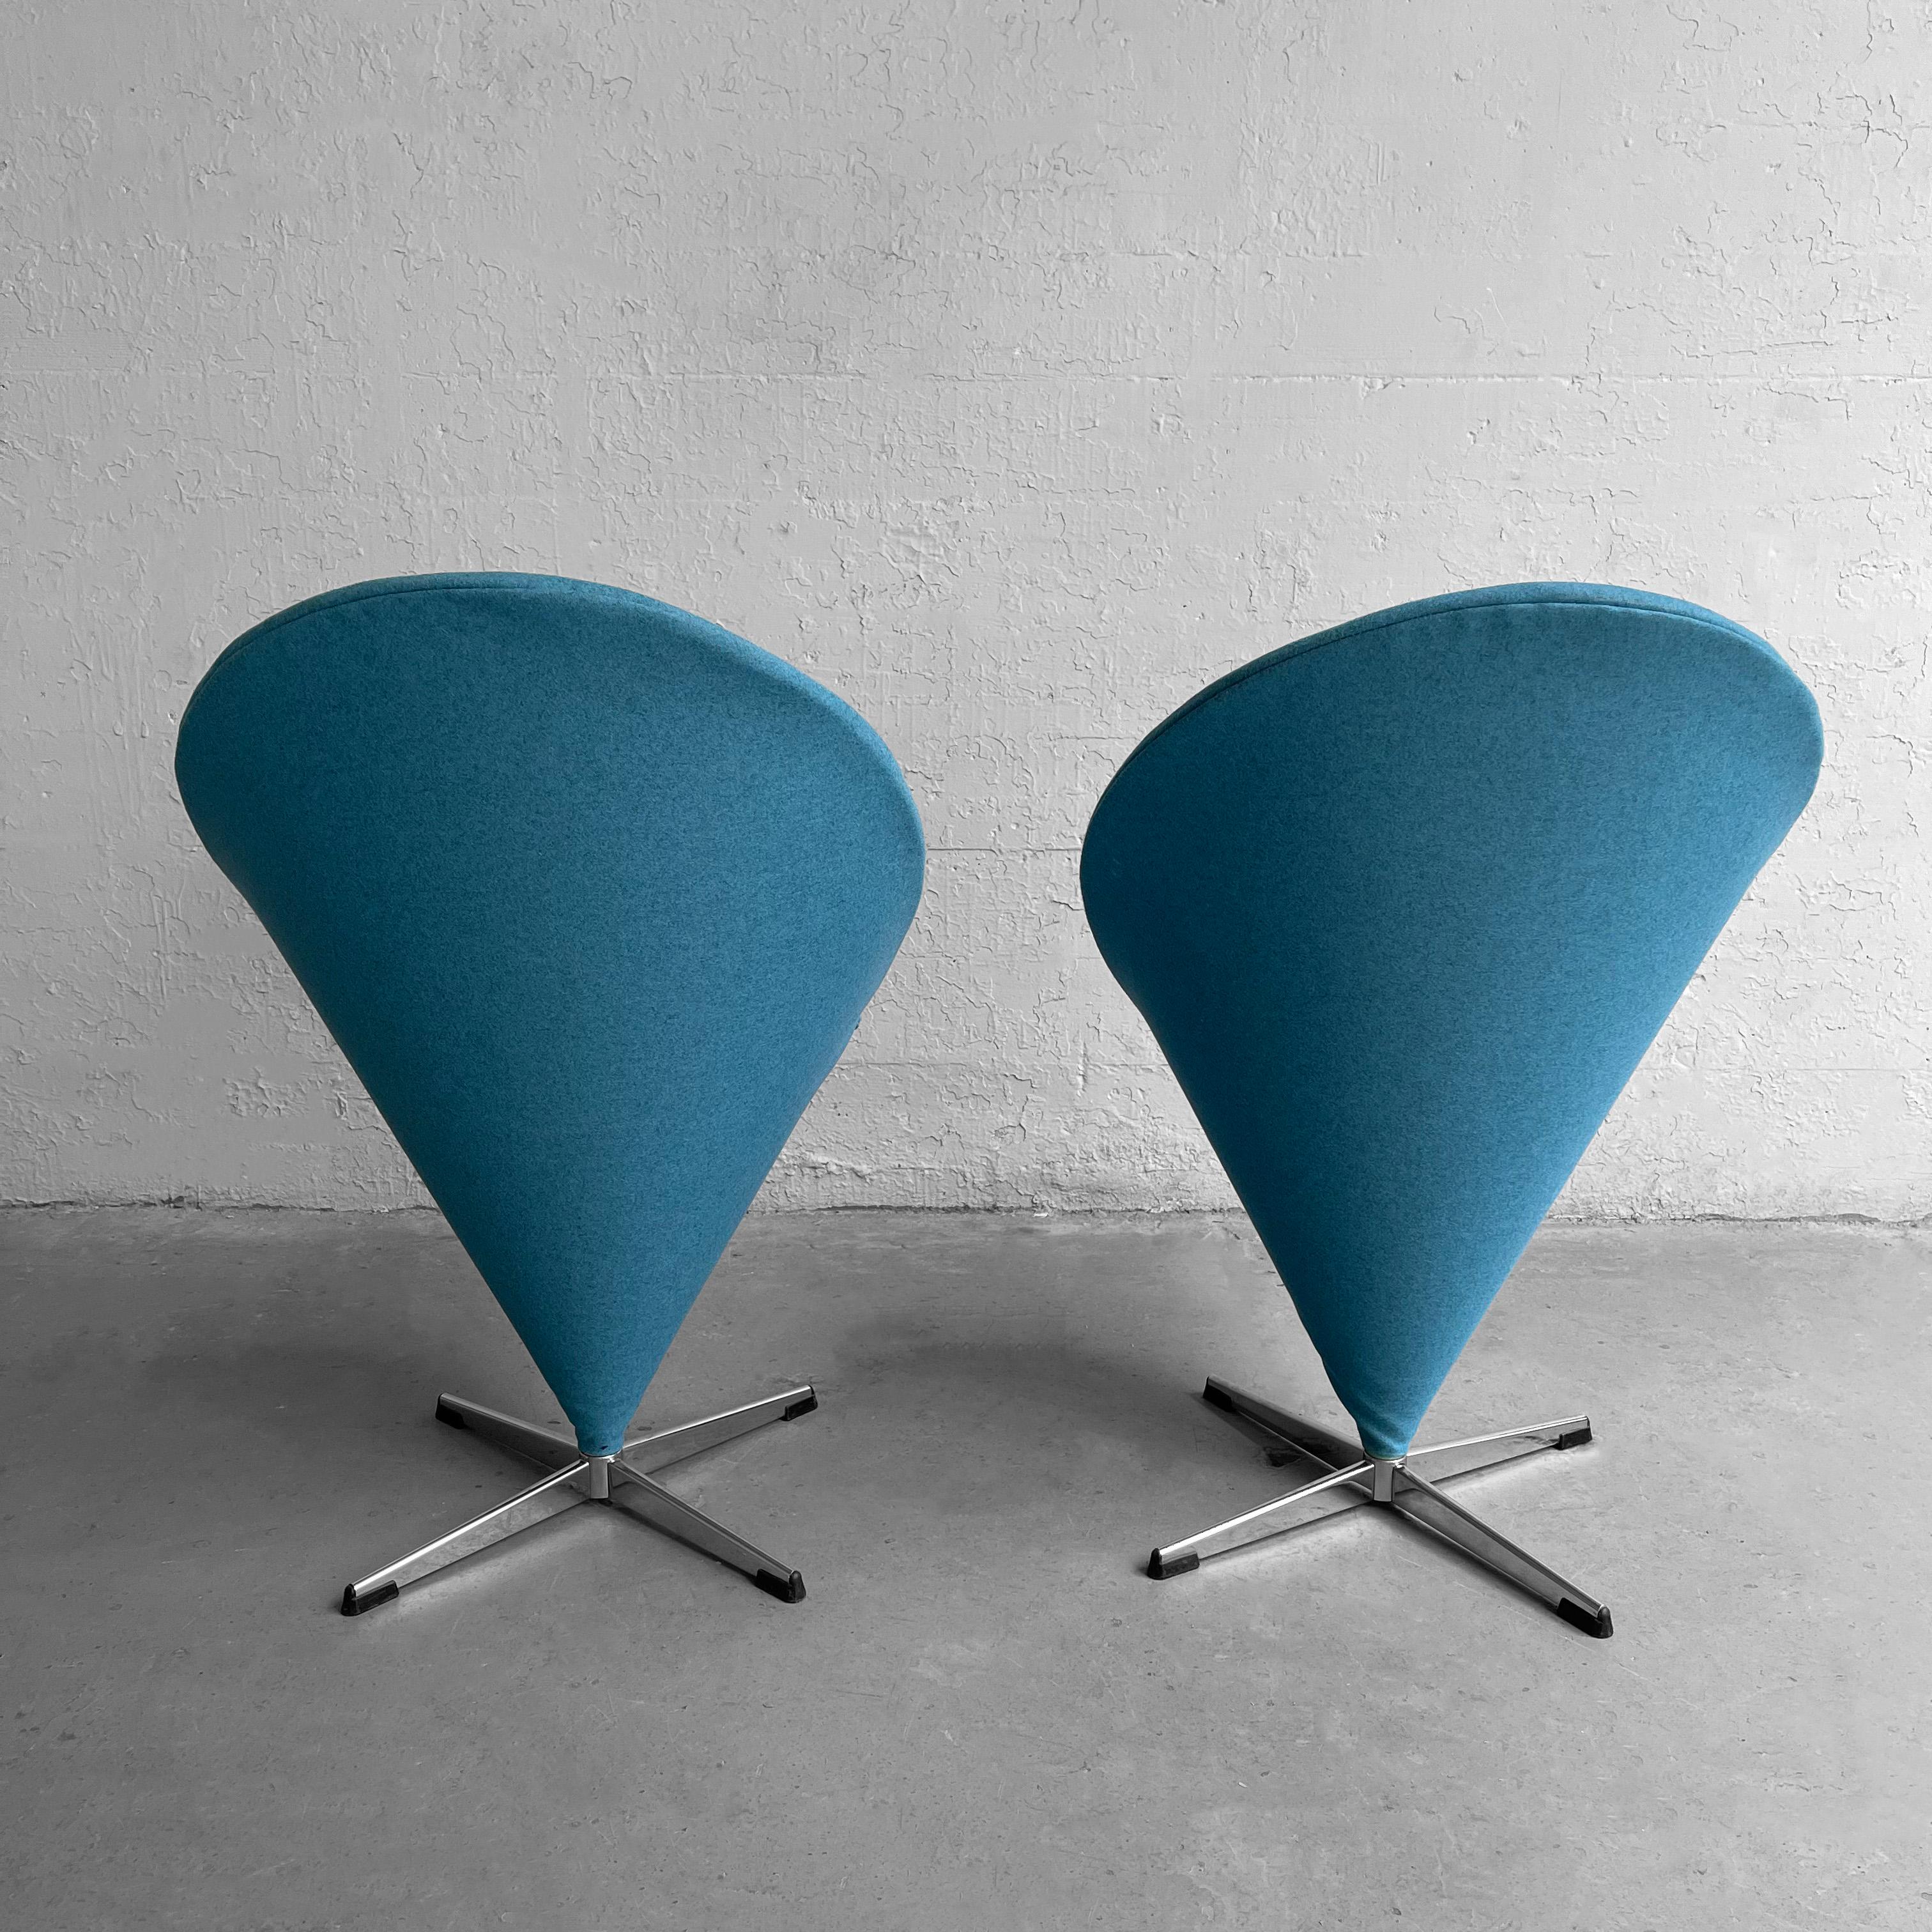 20th Century Pair of Verner Panton Cone Chairs